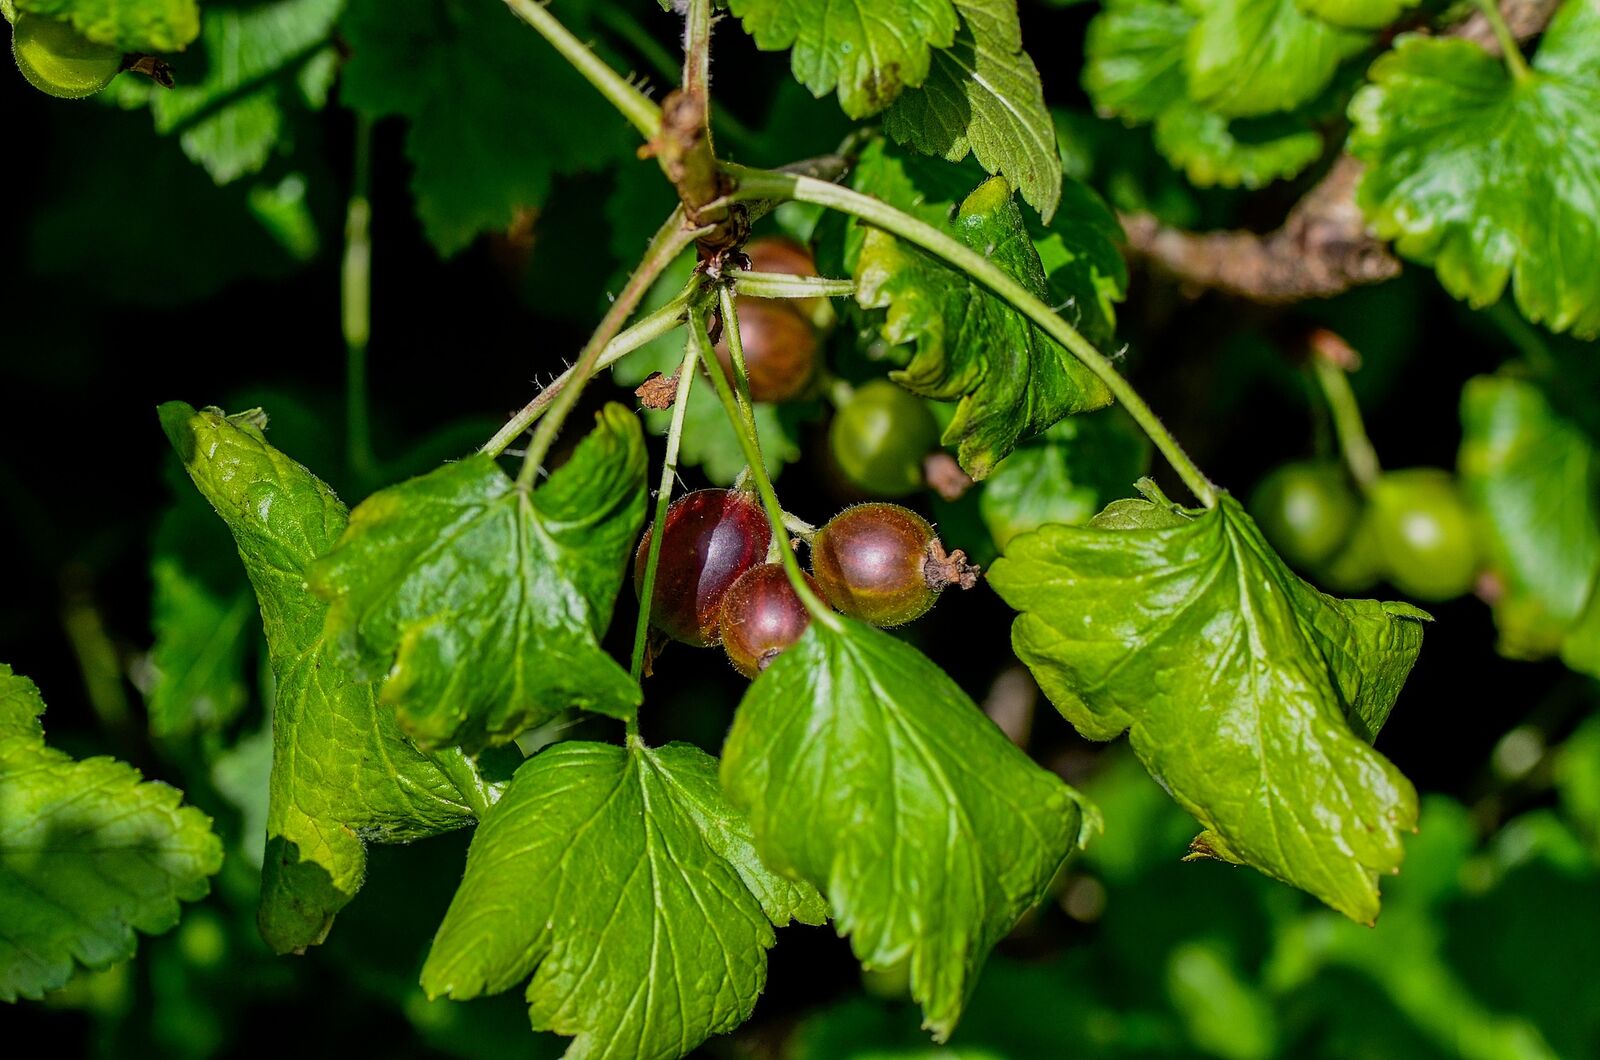 Prune gooseberries correctly and avoid diseases